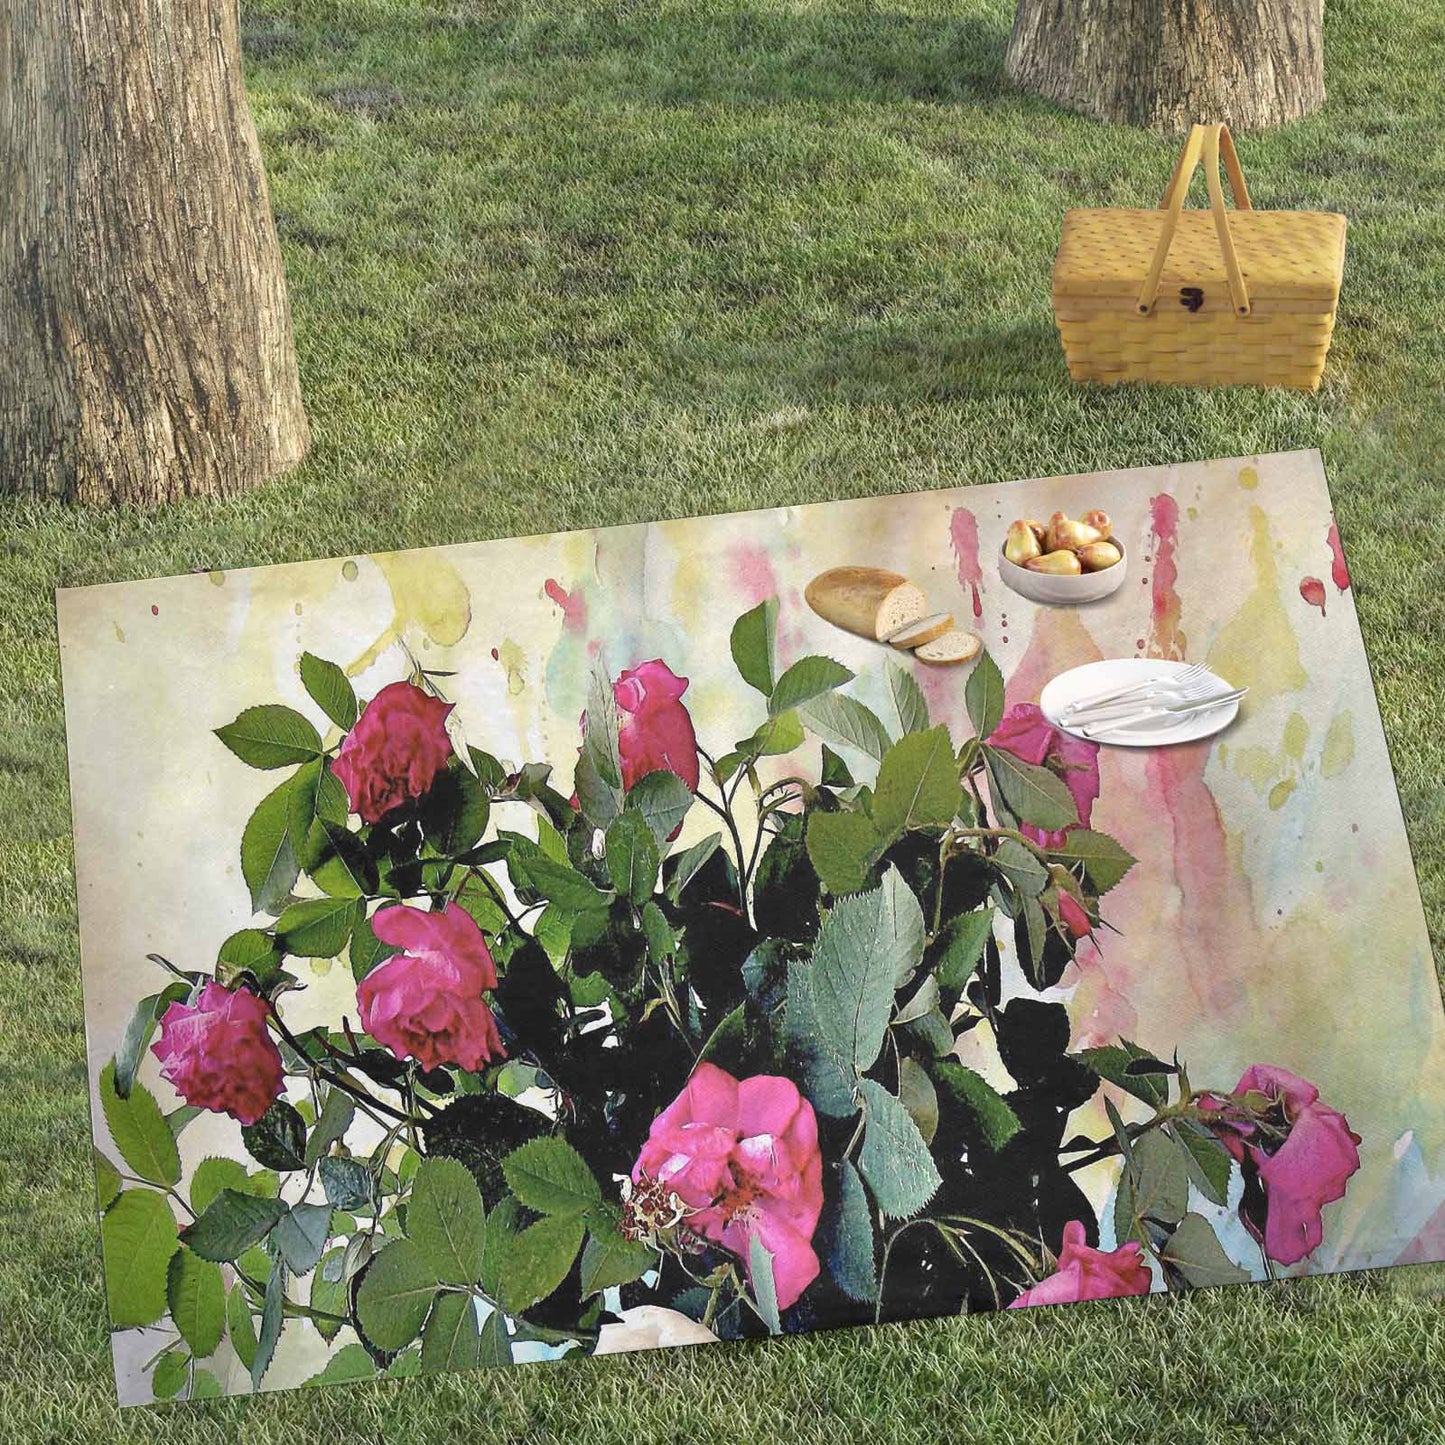 Vintage Floral waterproof picnic mat, 81 x 55in, Design 22